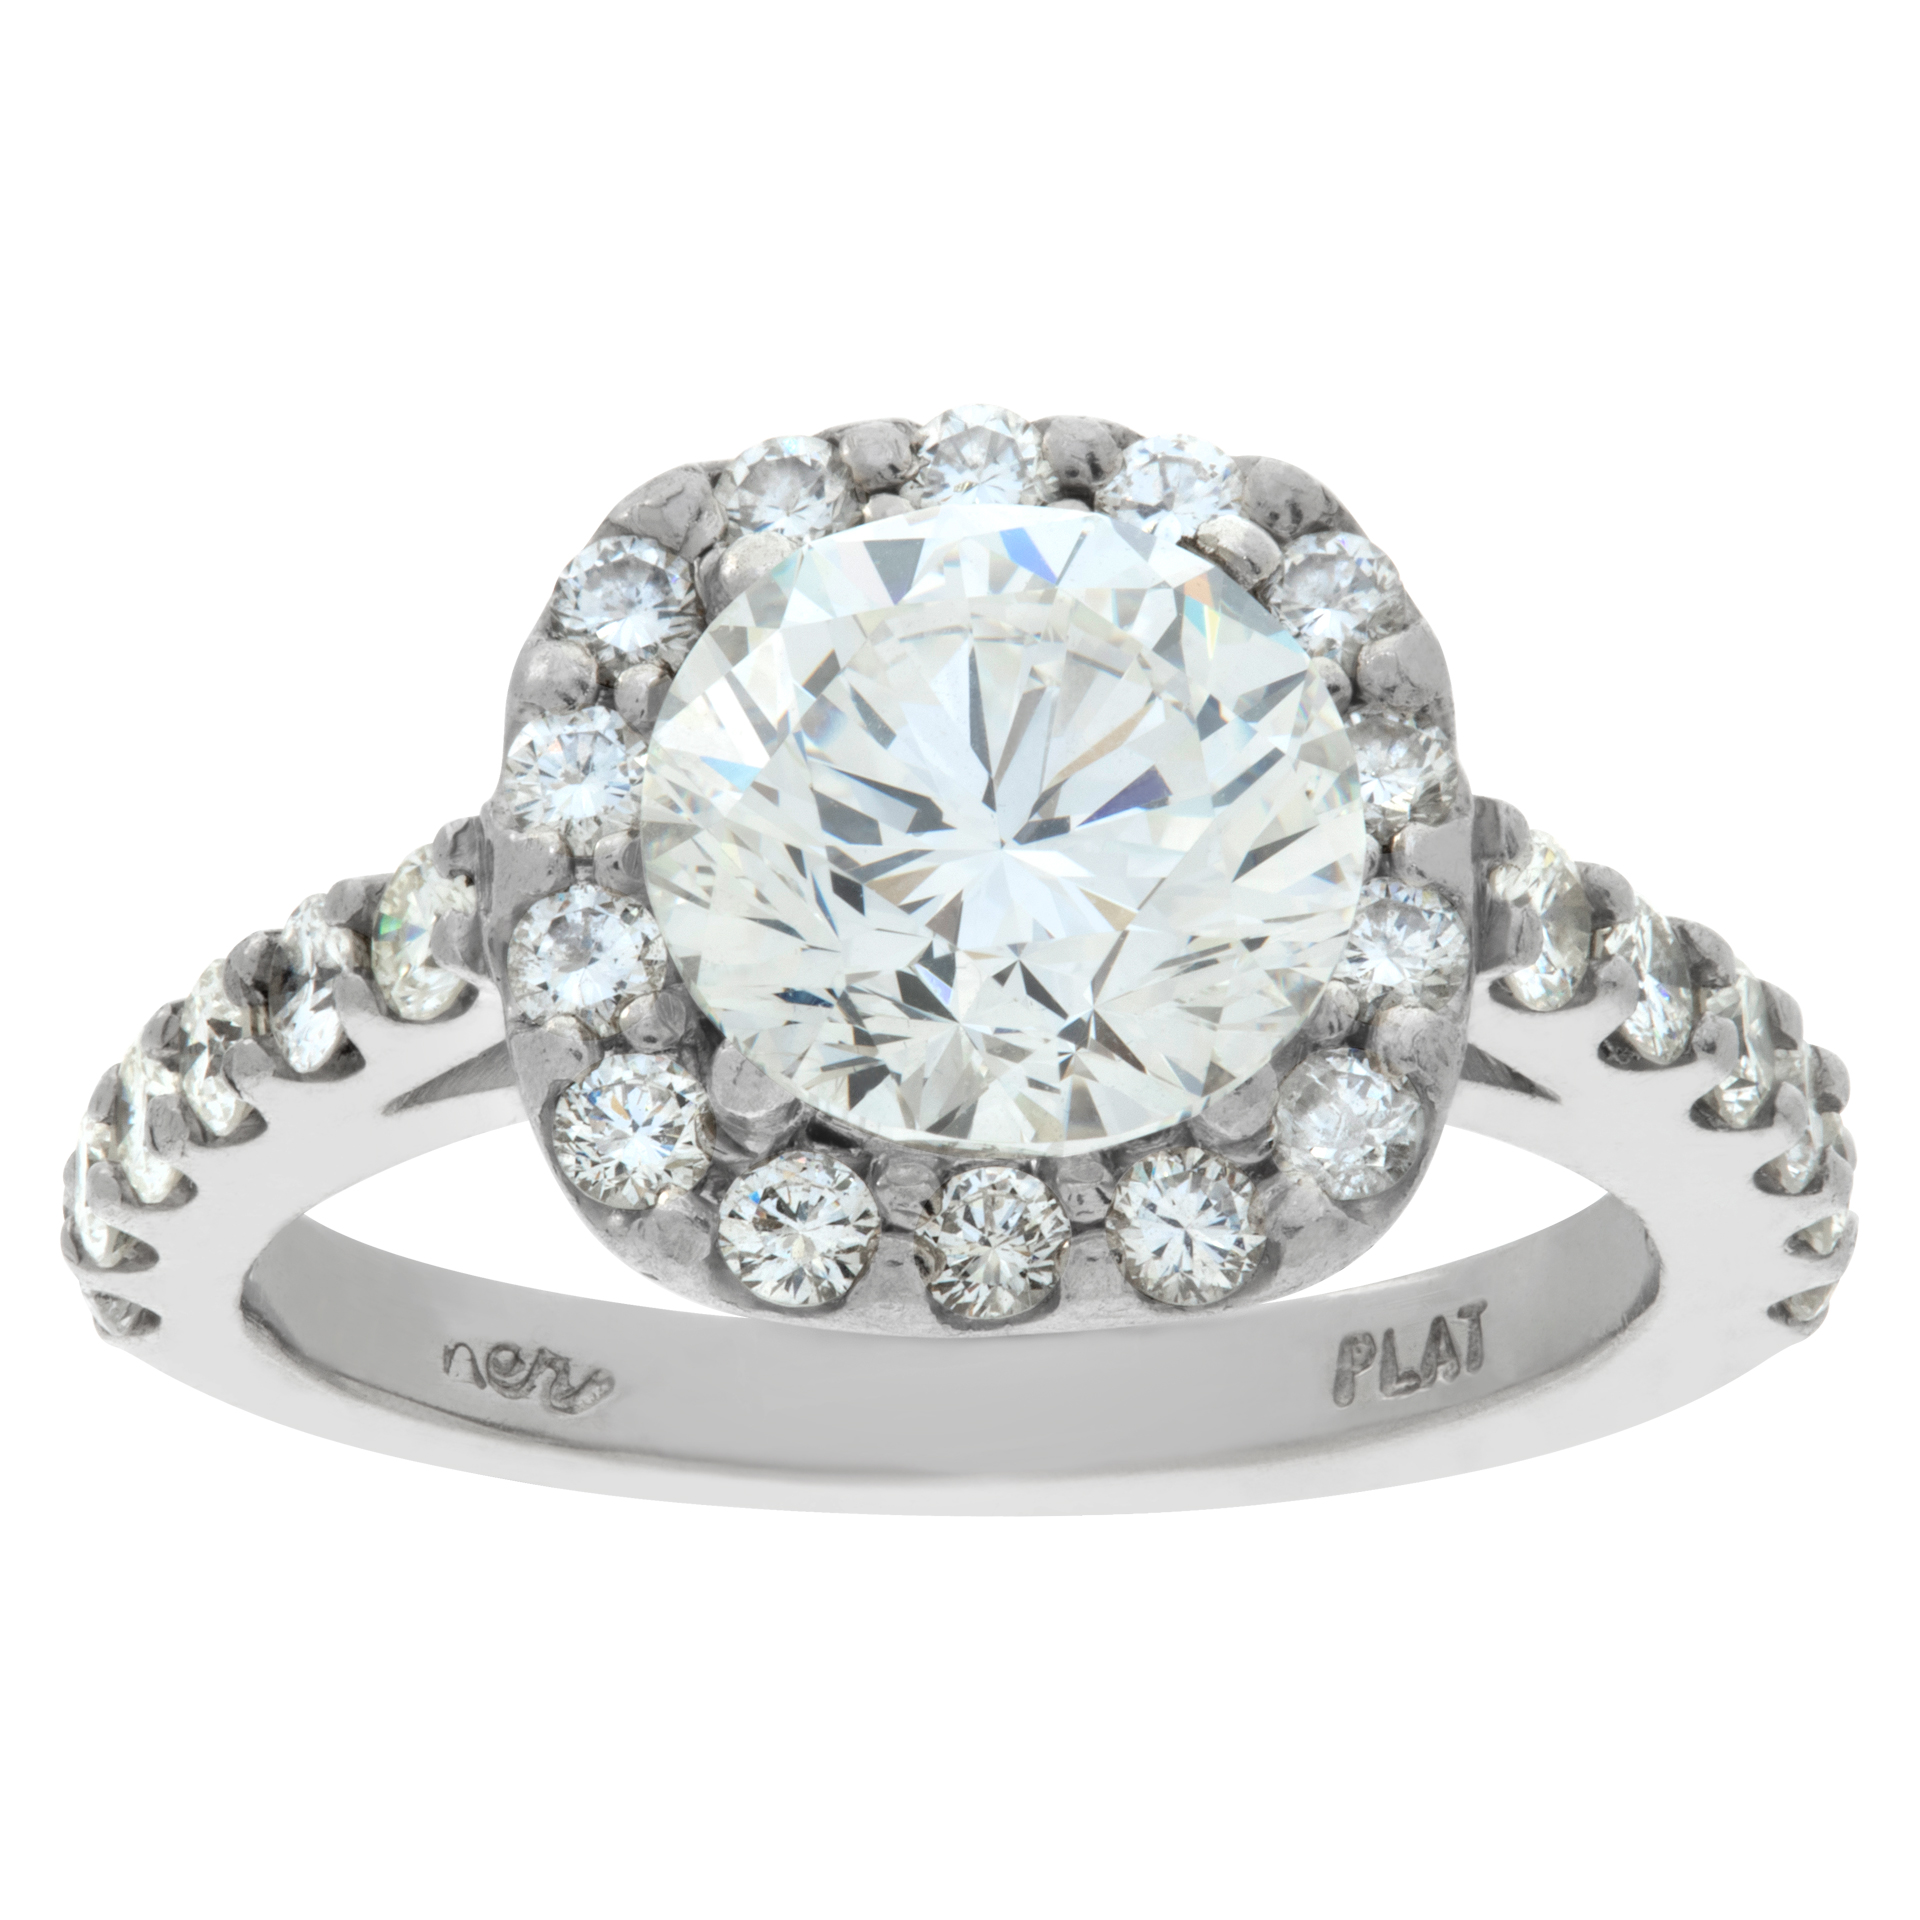 GIA certified round brilliant cut diamond 2.03 carat ( I color, SI1 clarity) ring set in platrinum image 1